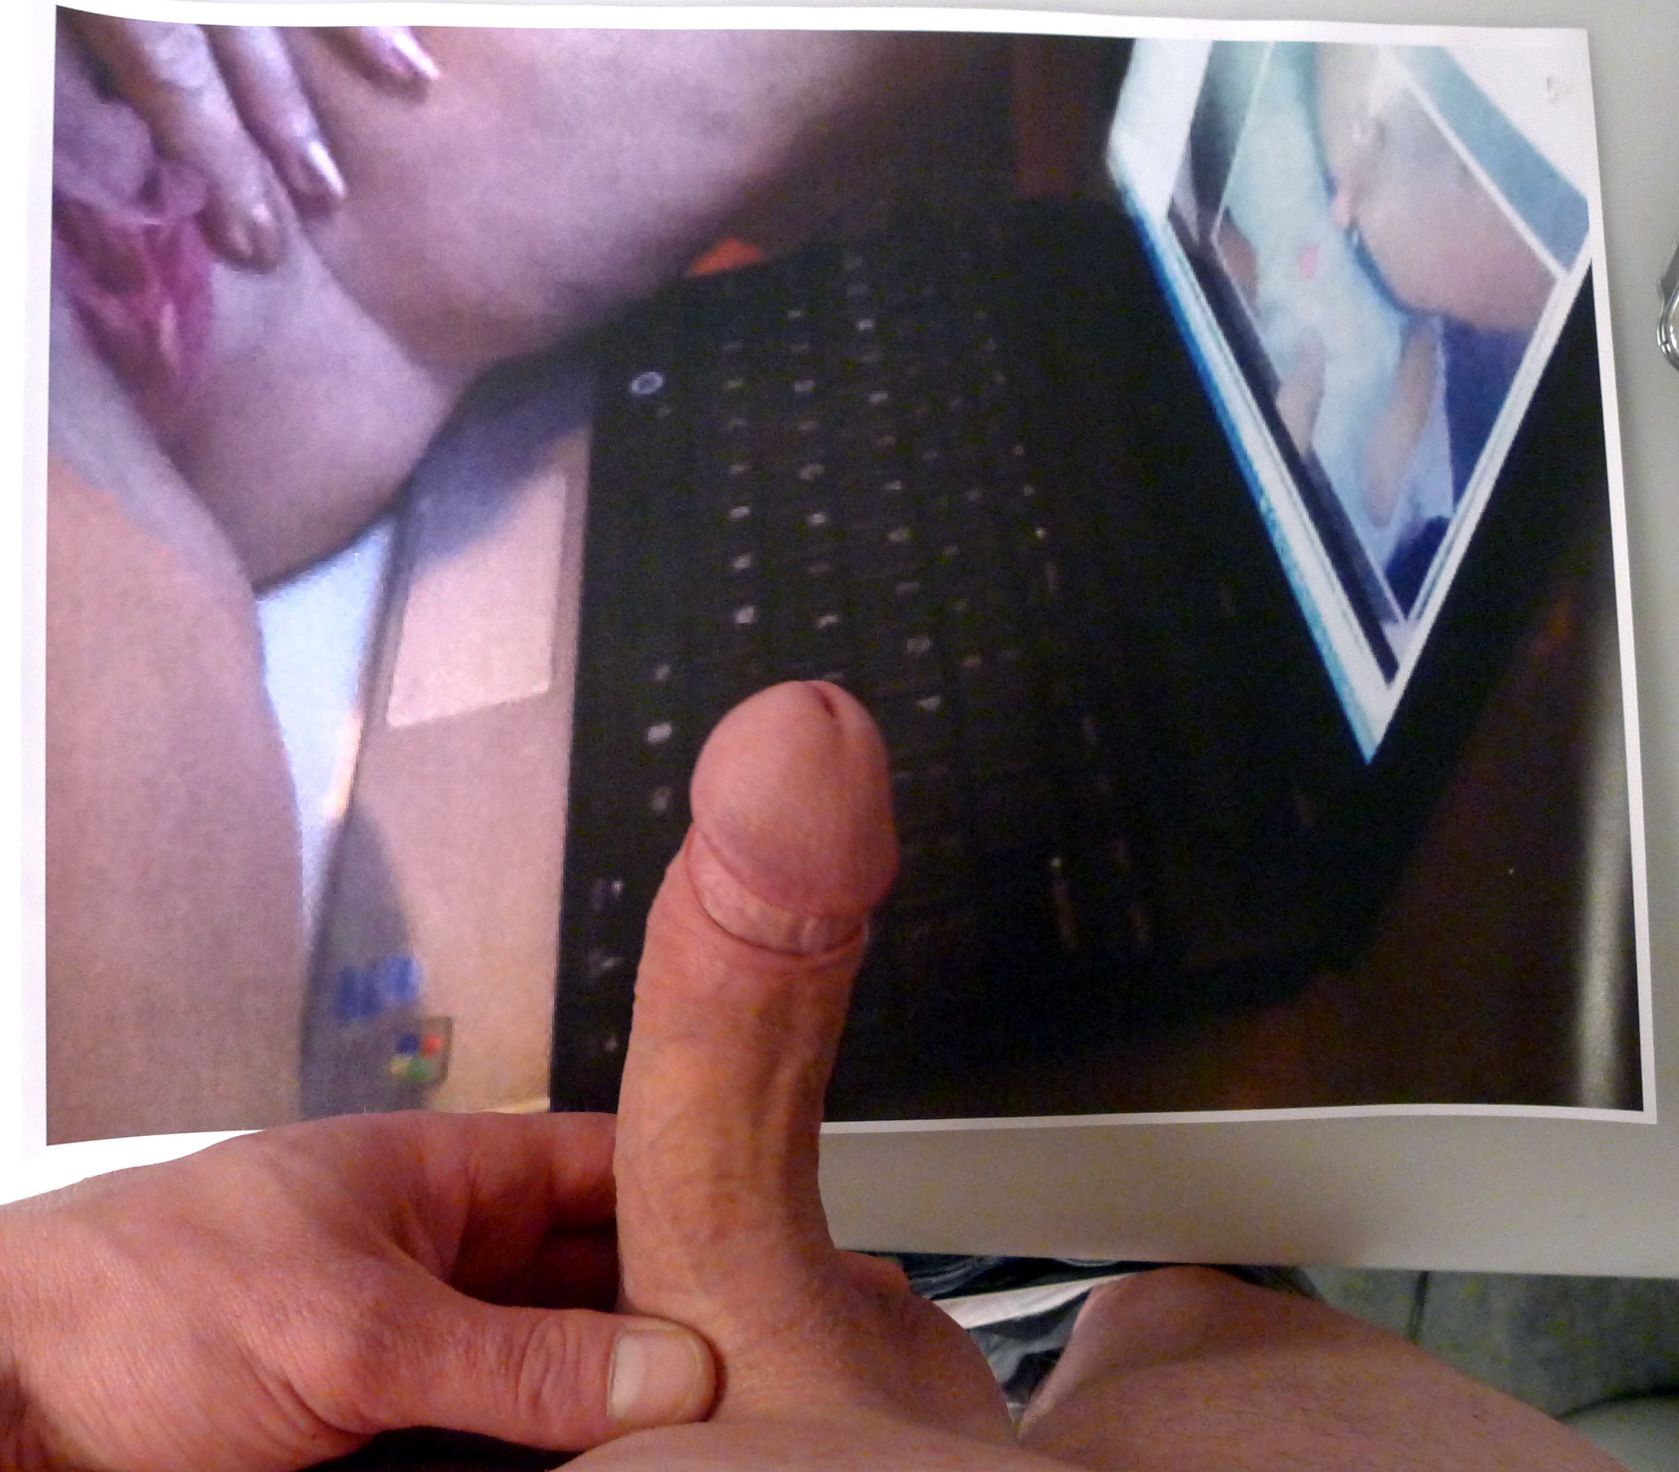 Stefan cumming on the latest pics i sent (2)